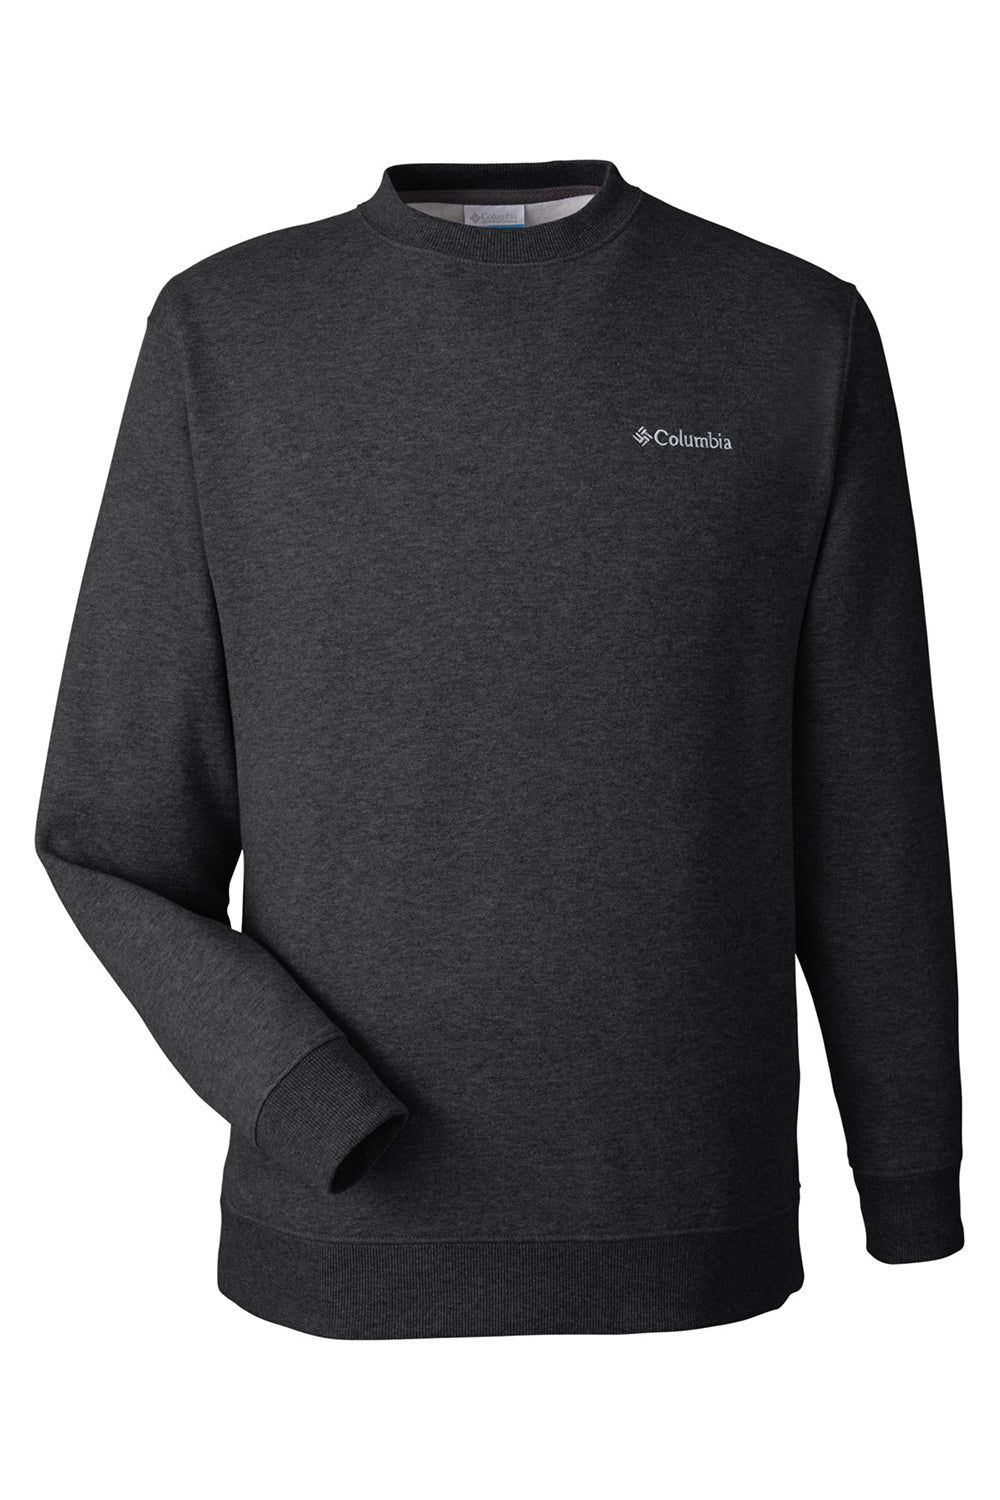 Columbia 1411601 Mens Hart Mountain Long Sleeve Crewneck Sweater Black Flat Front